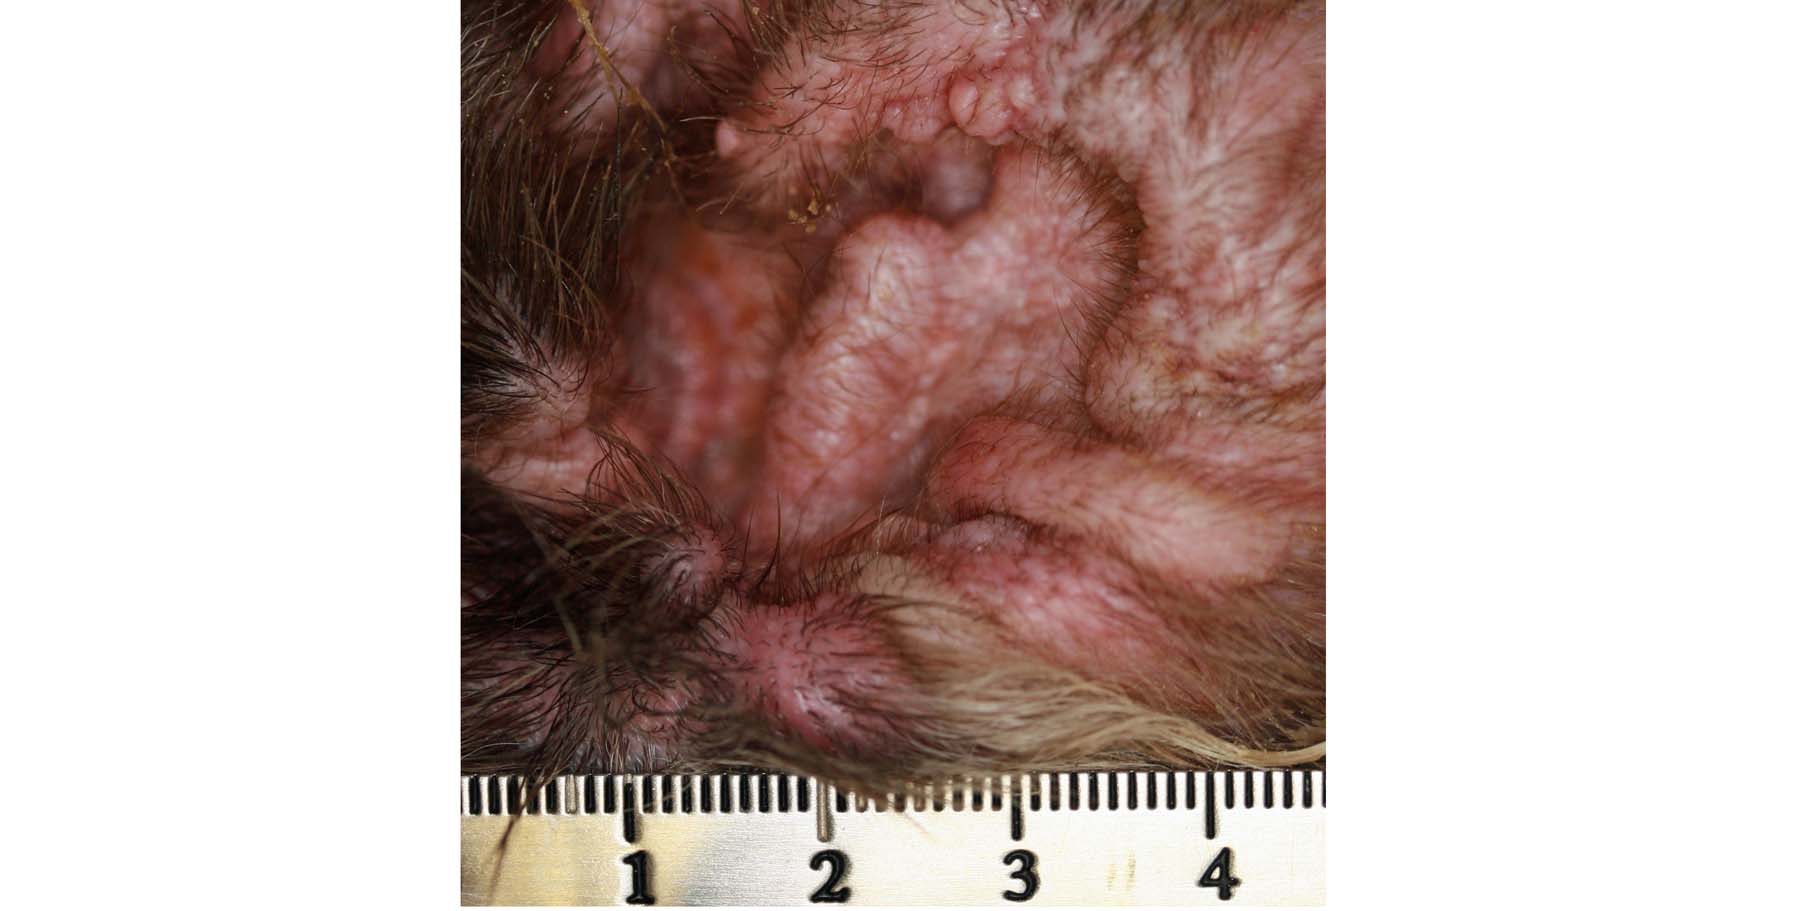 Chronic Recurrent Otitis with Secondary Ceruminous Gland Hyperplasia